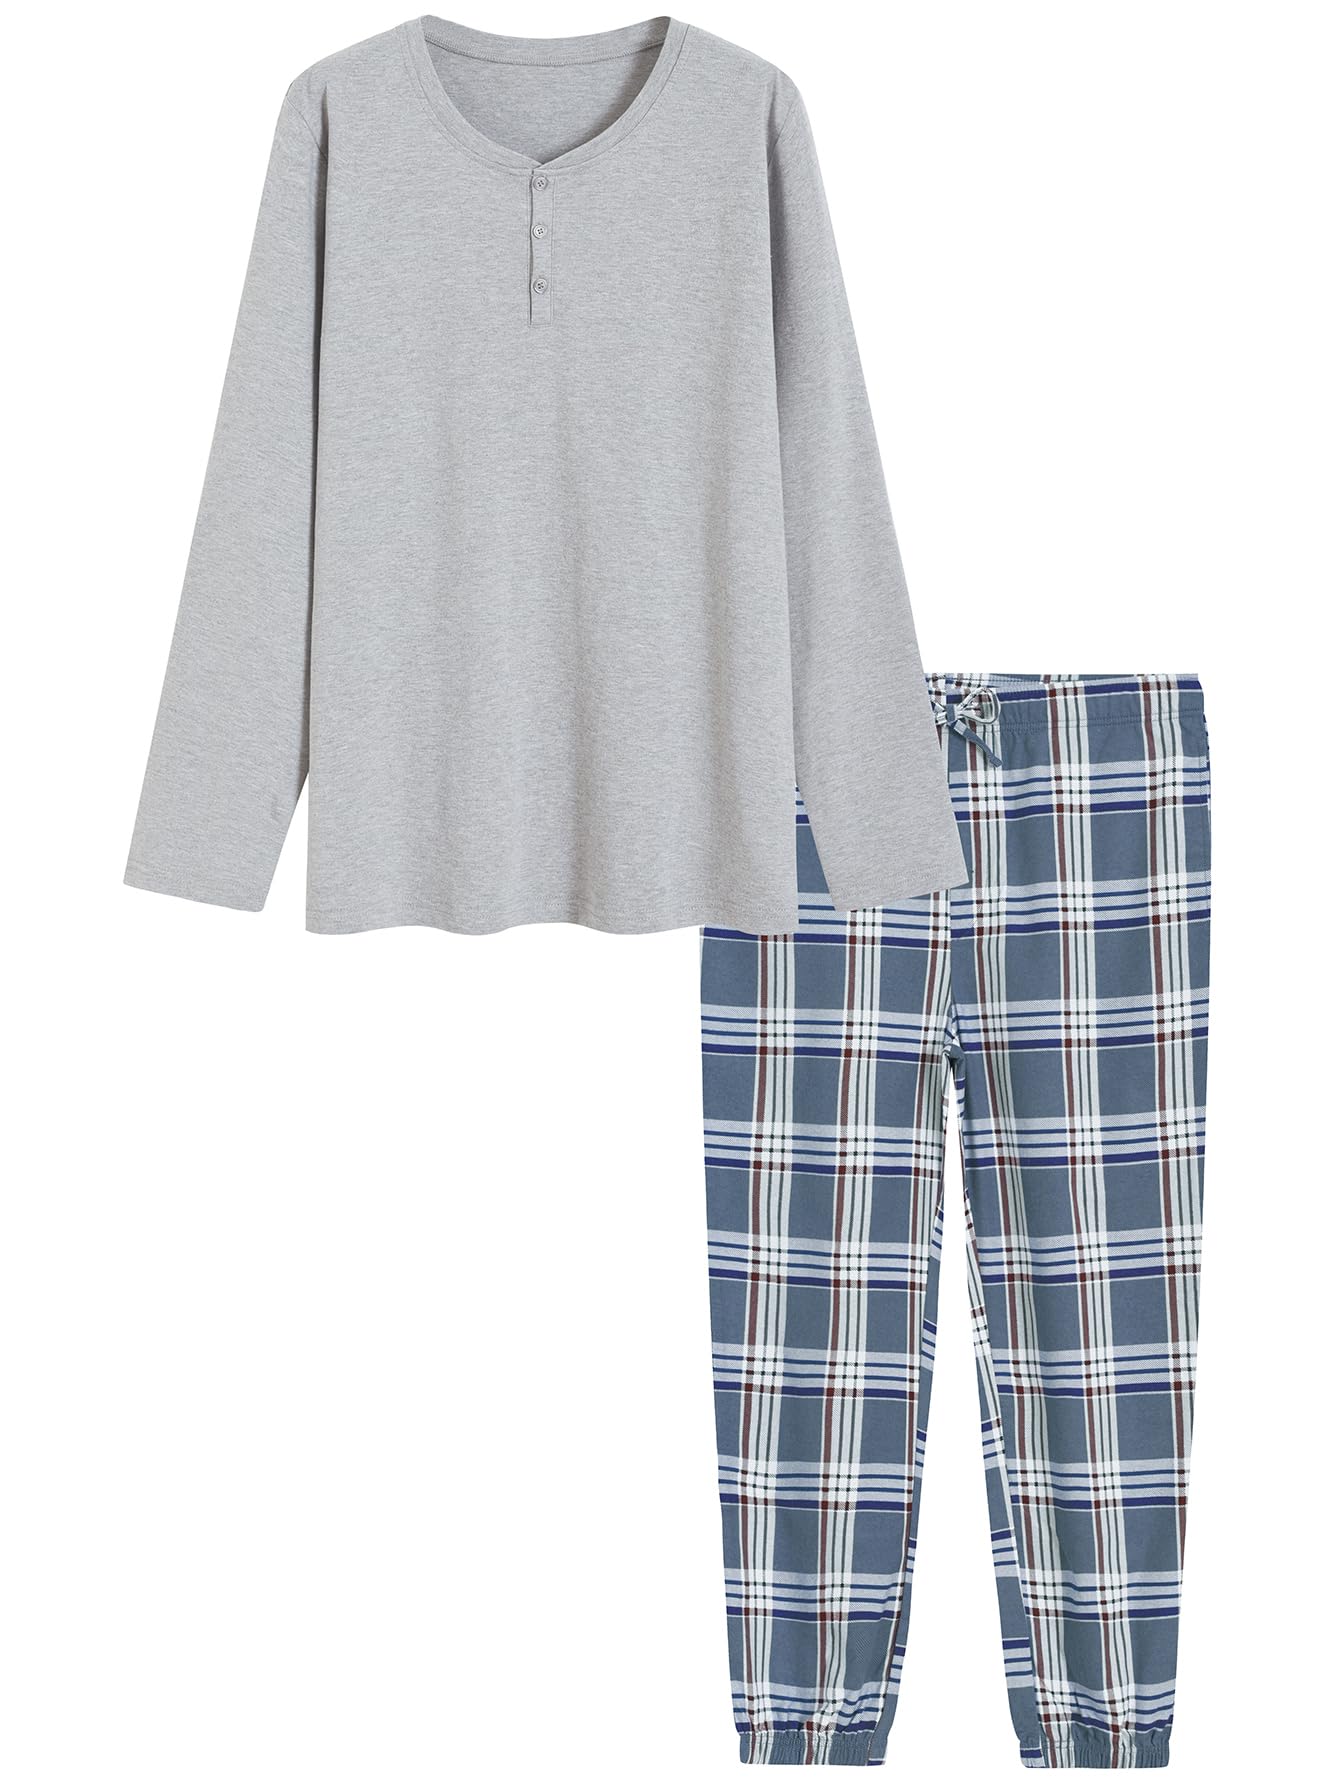 Men's Cotton Pajama Set Long Sleeve Henley Top Flannel Pants with Pockets - Latuza